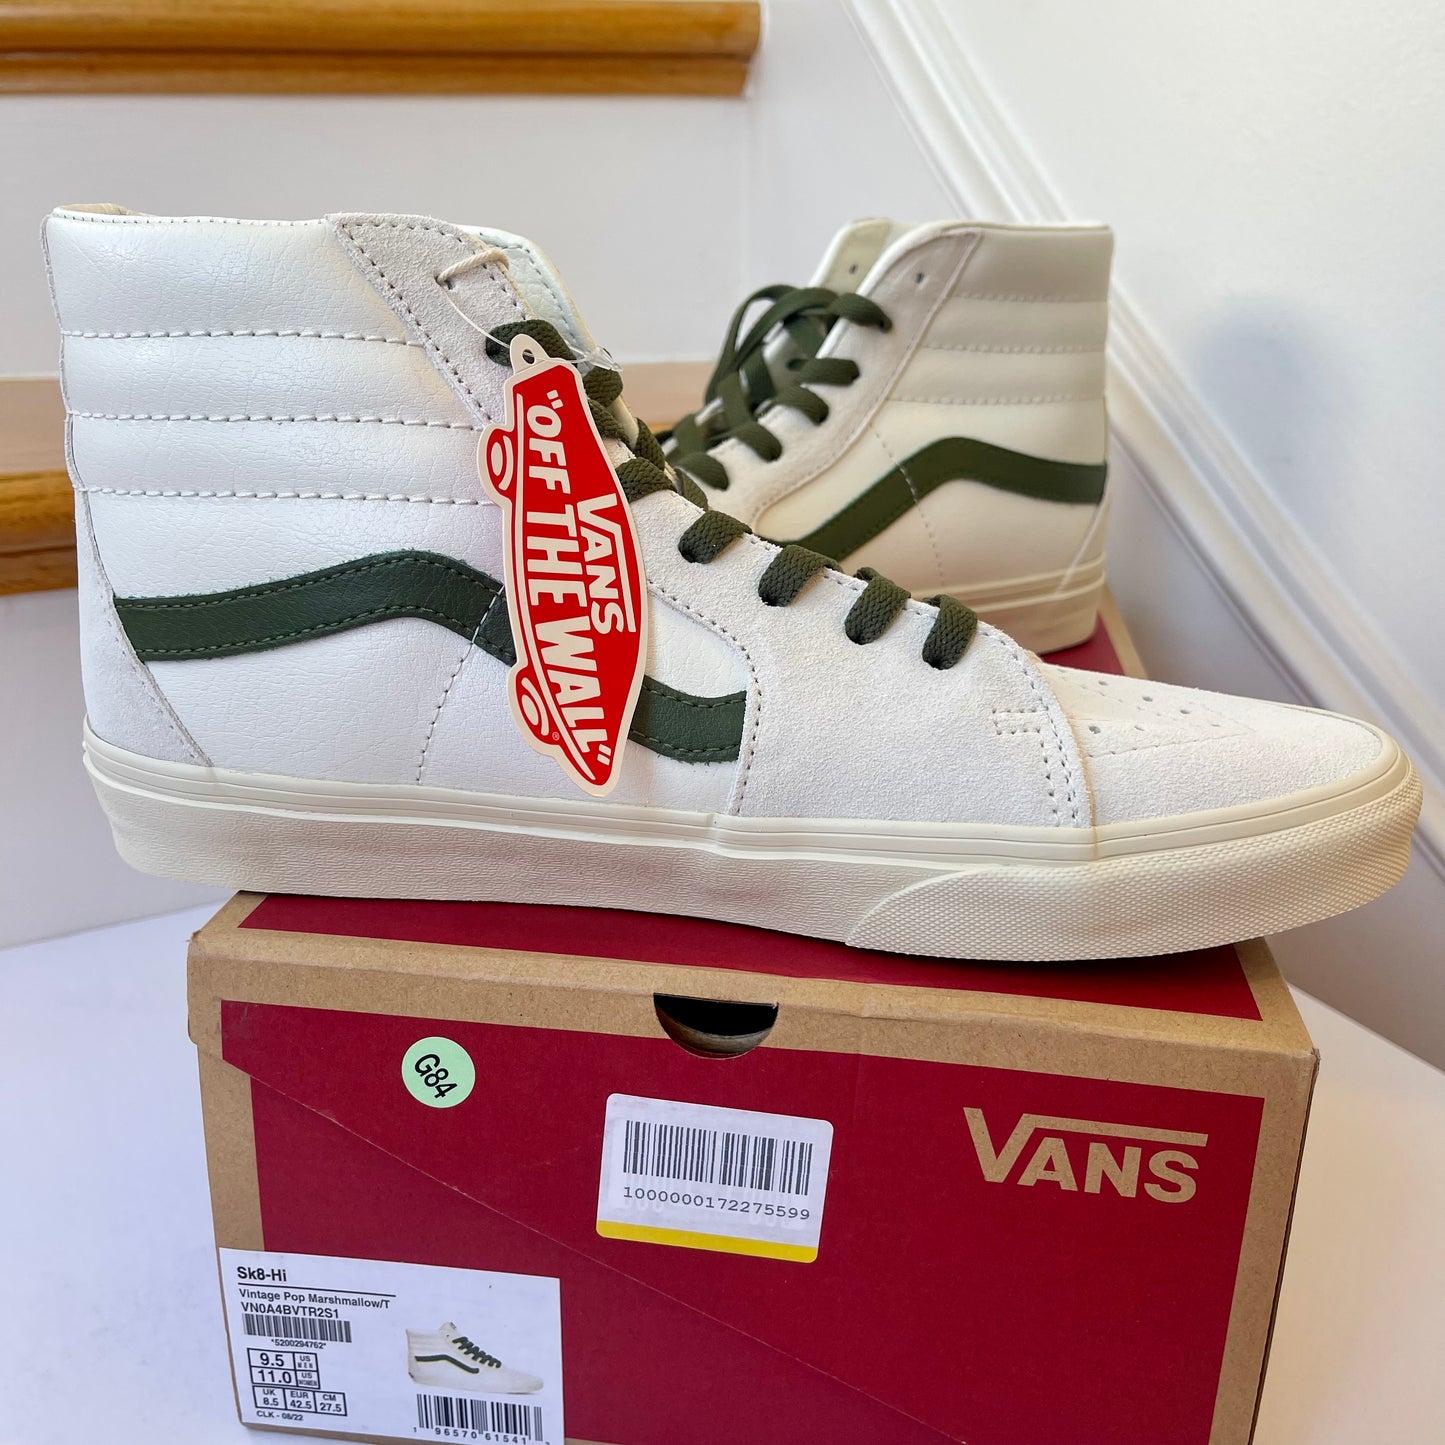 Vans Sk8 Hi Leather Sneakers in Vintage Pop - Marshmallow Turtledove